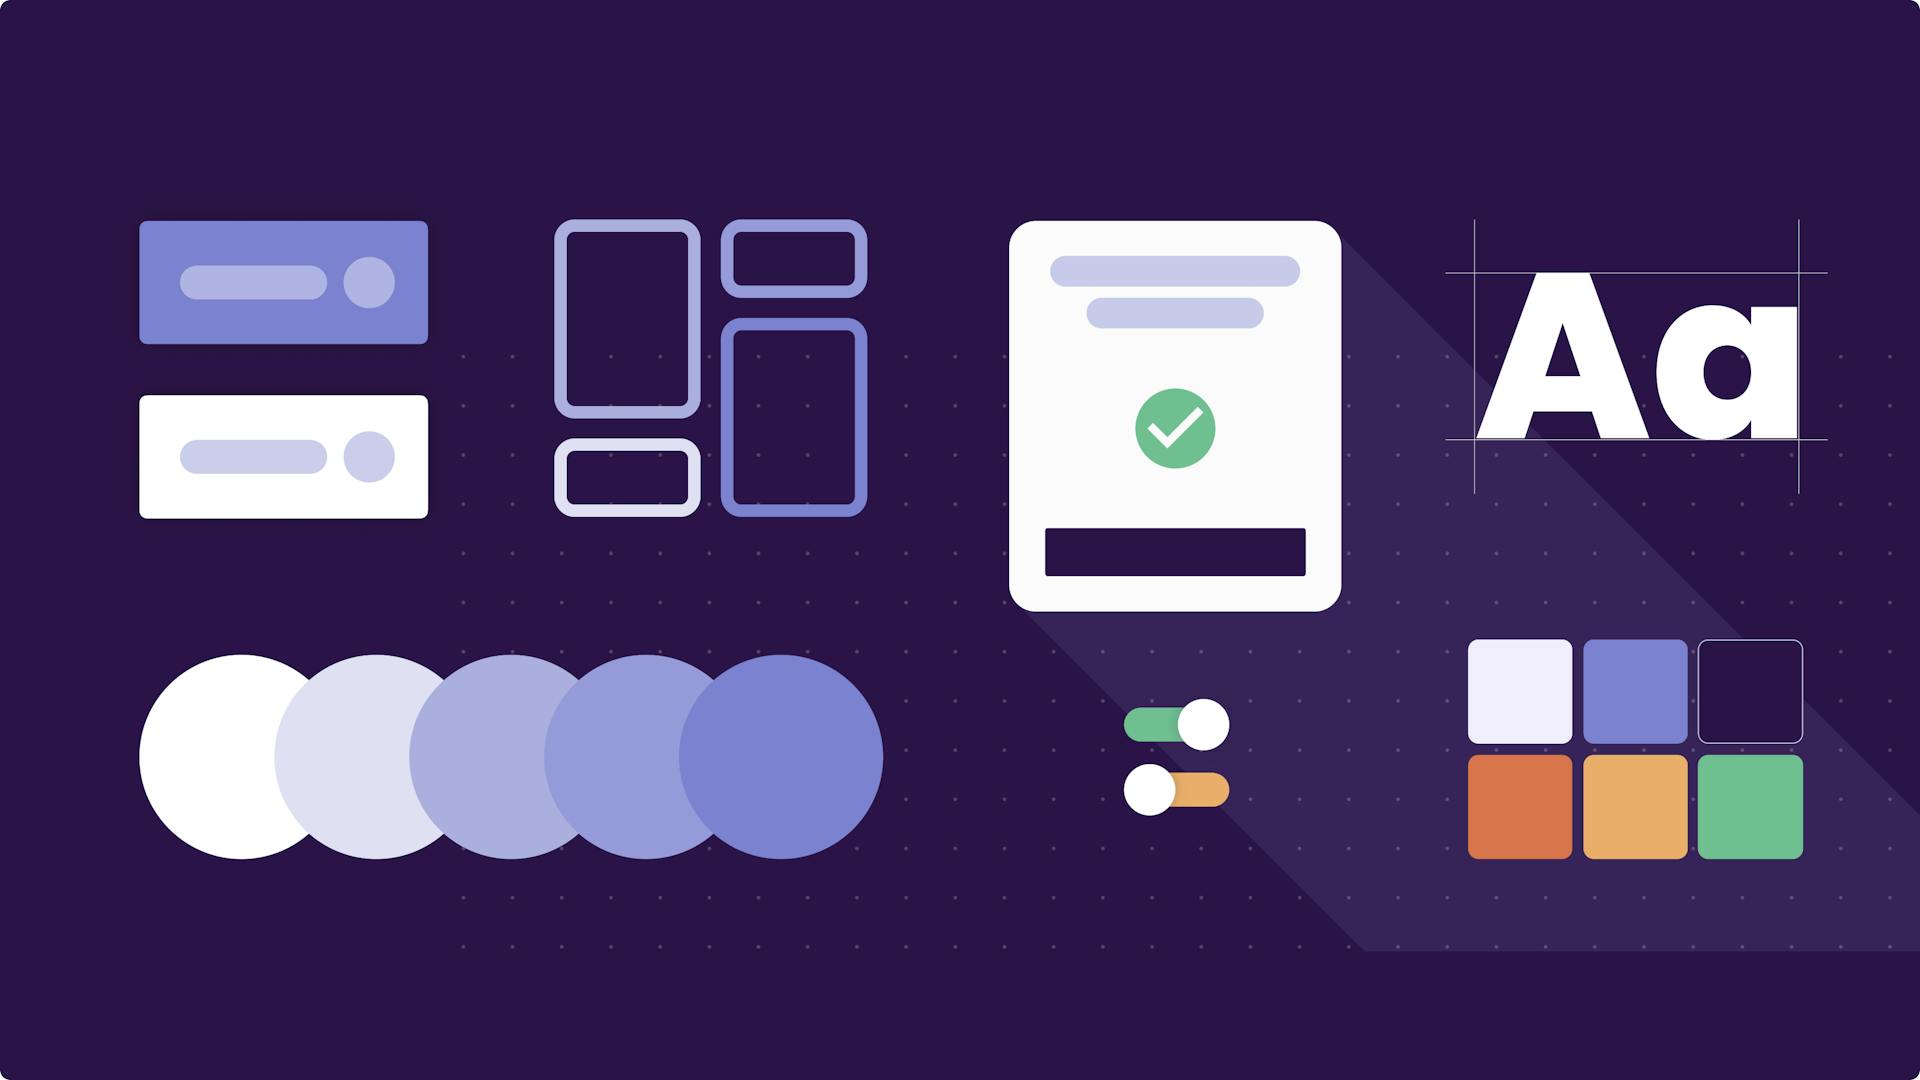 Elements of a design system, set on a dark purple background.